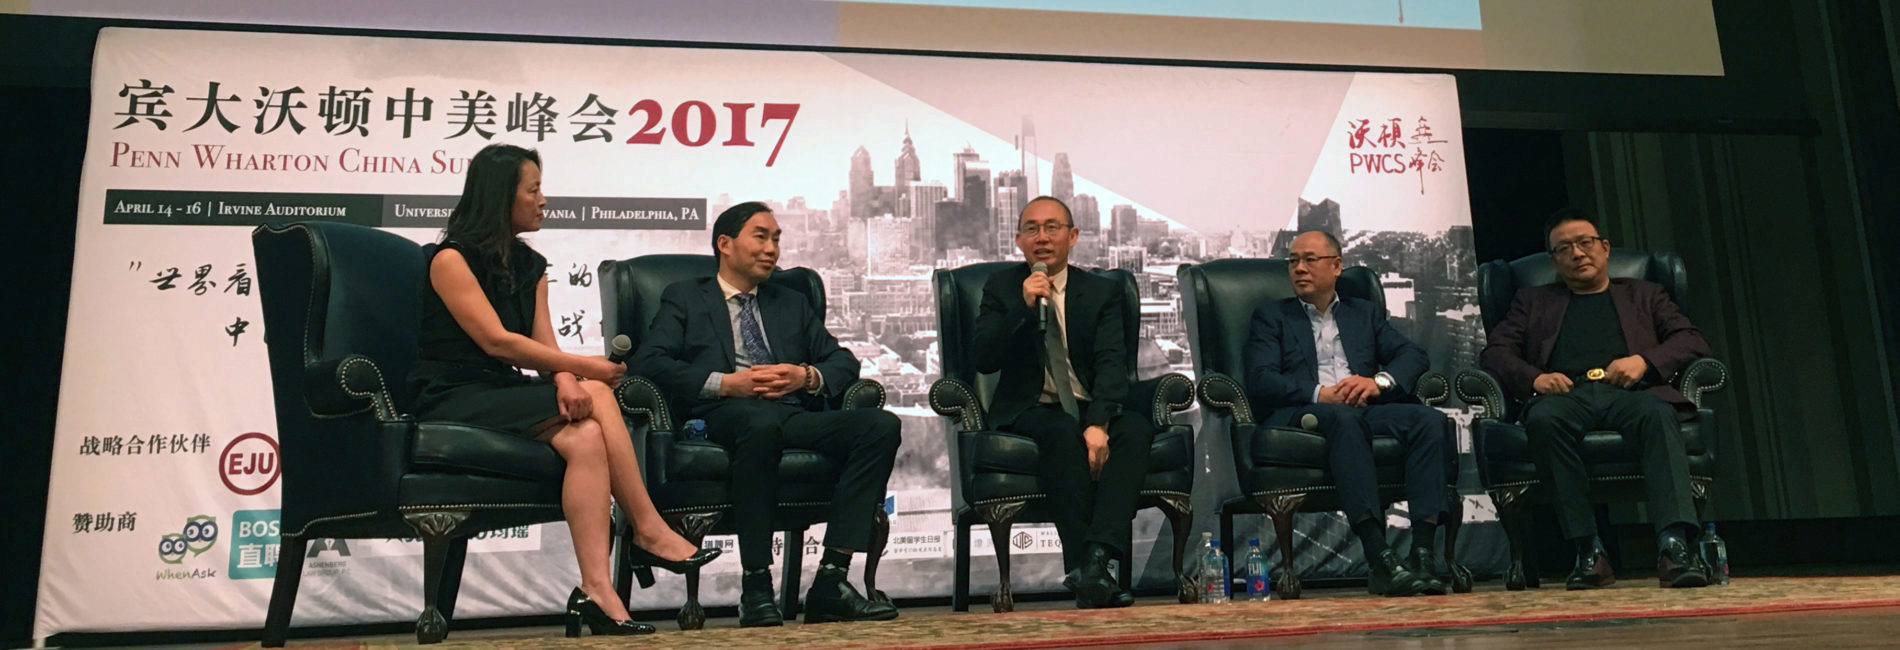 Penn Wharton China Summit